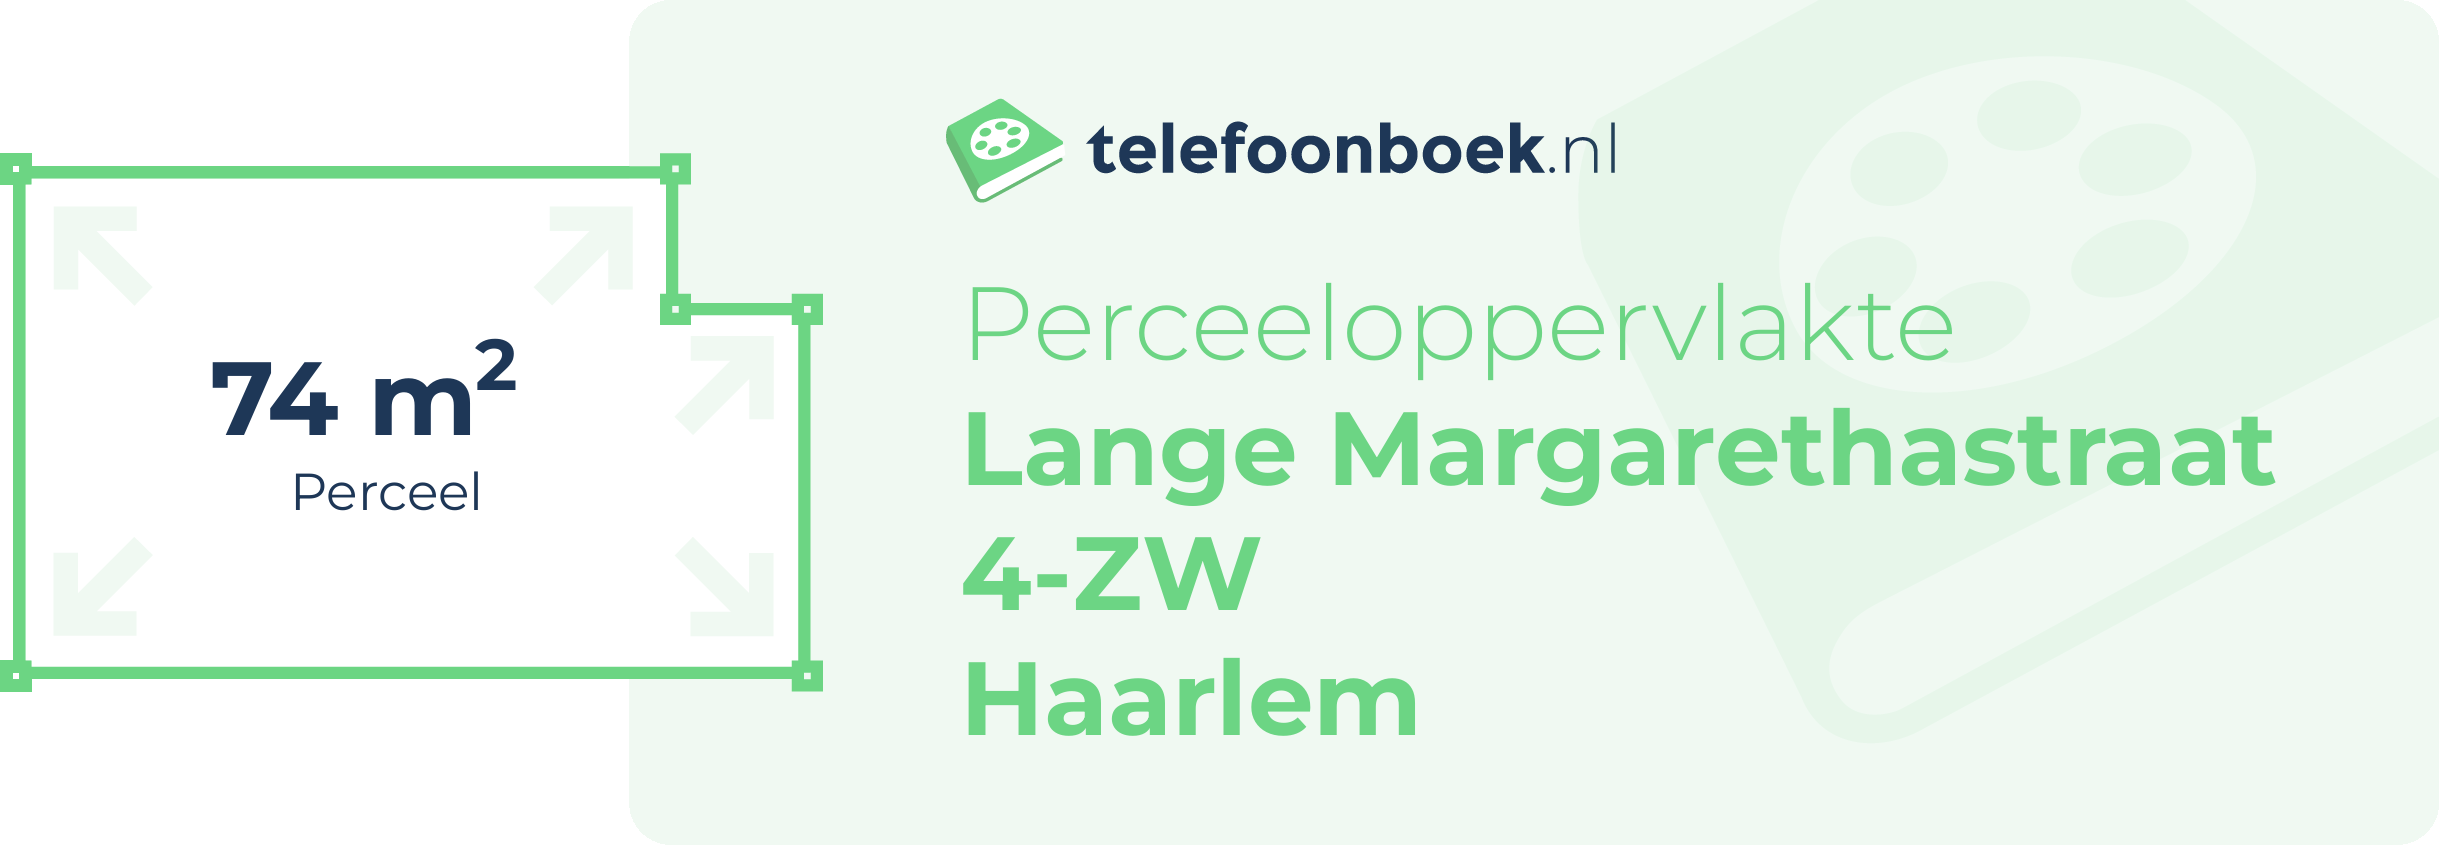 Perceeloppervlakte Lange Margarethastraat 4-ZW Haarlem